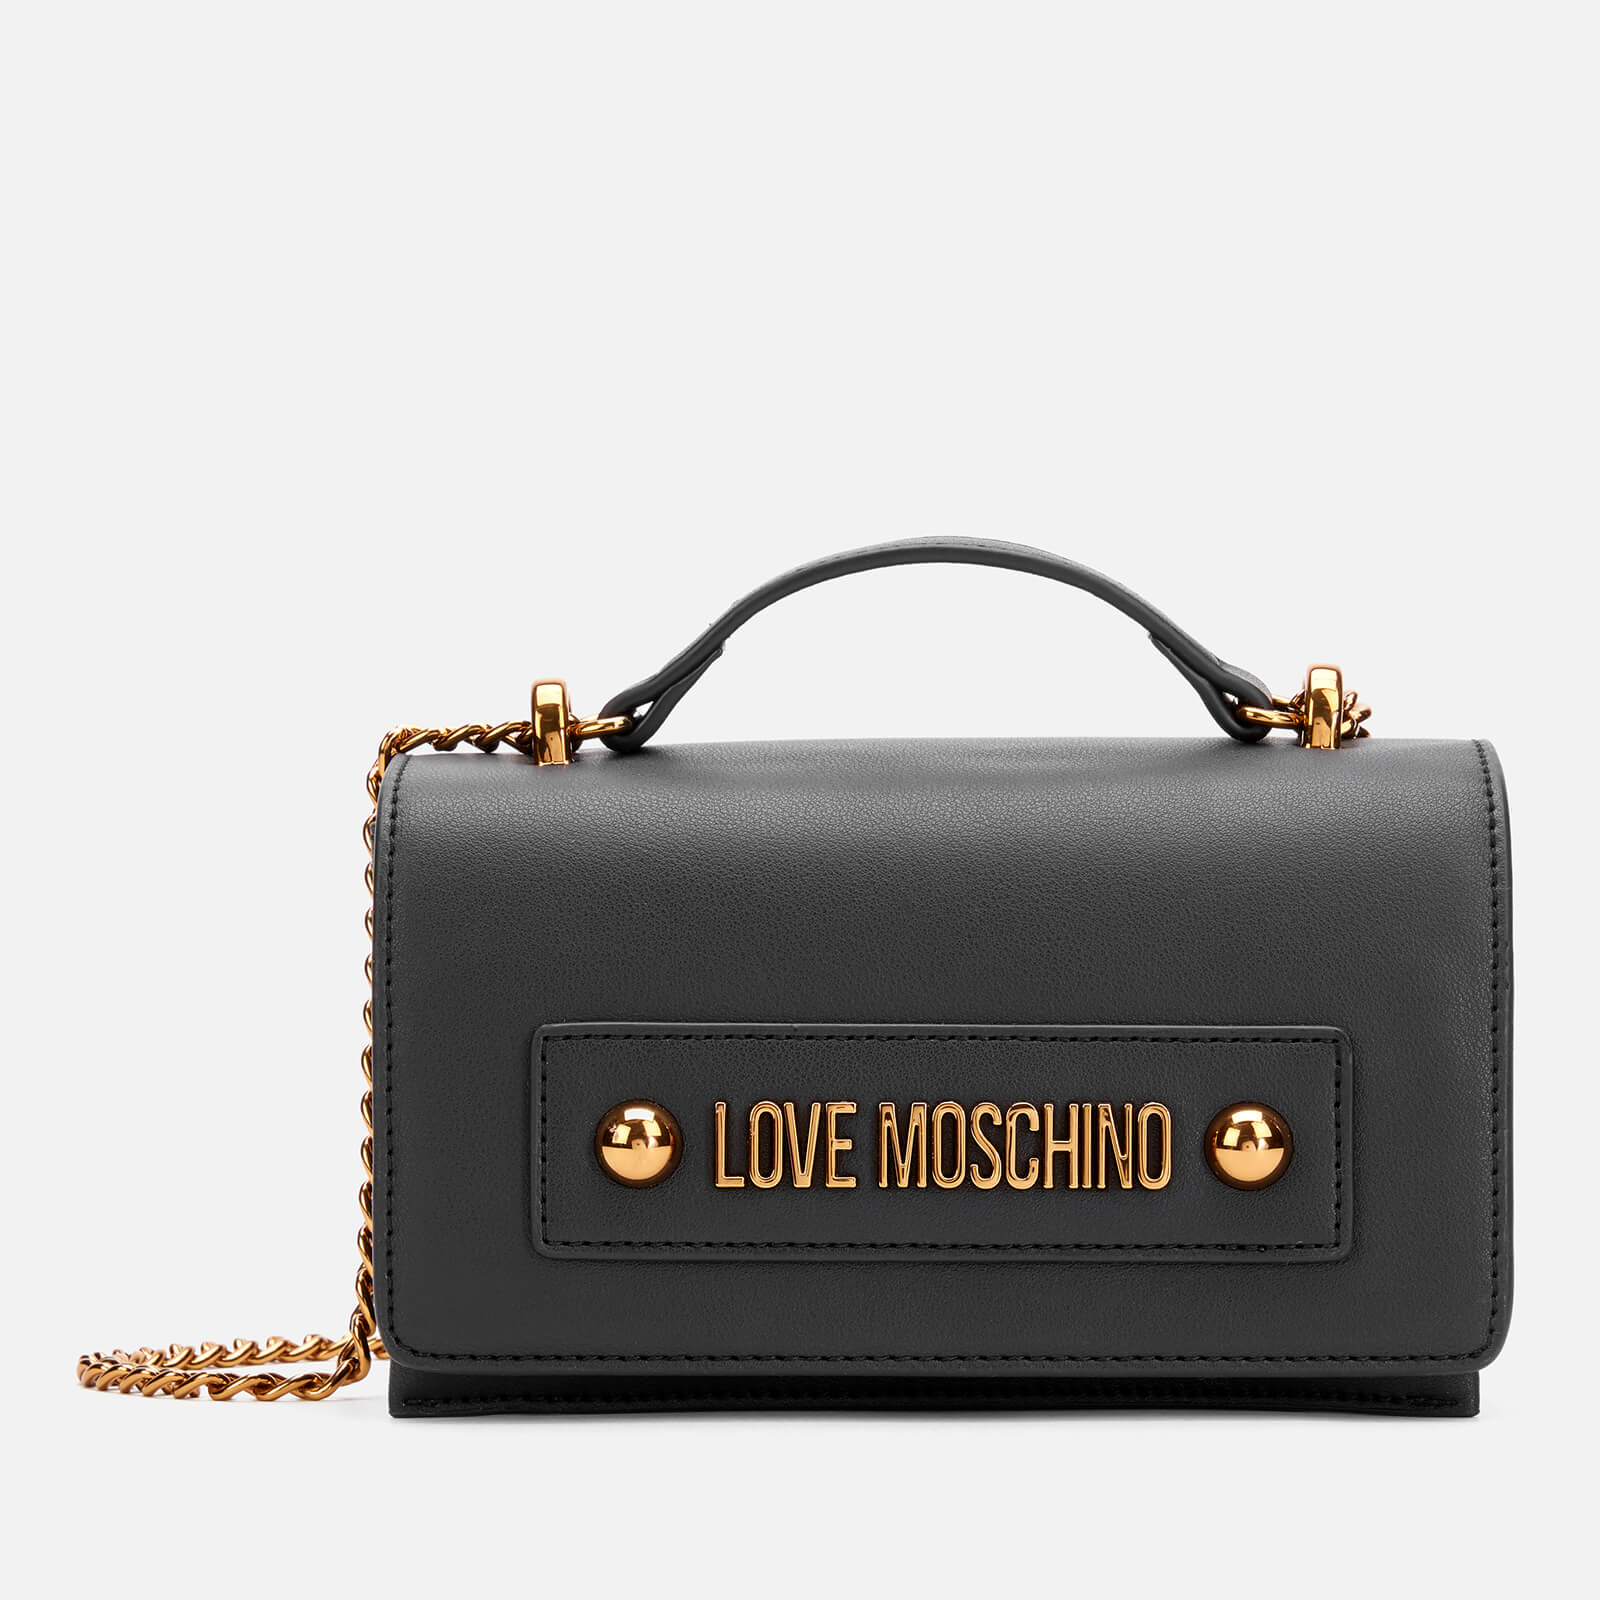 love moschino black handbag